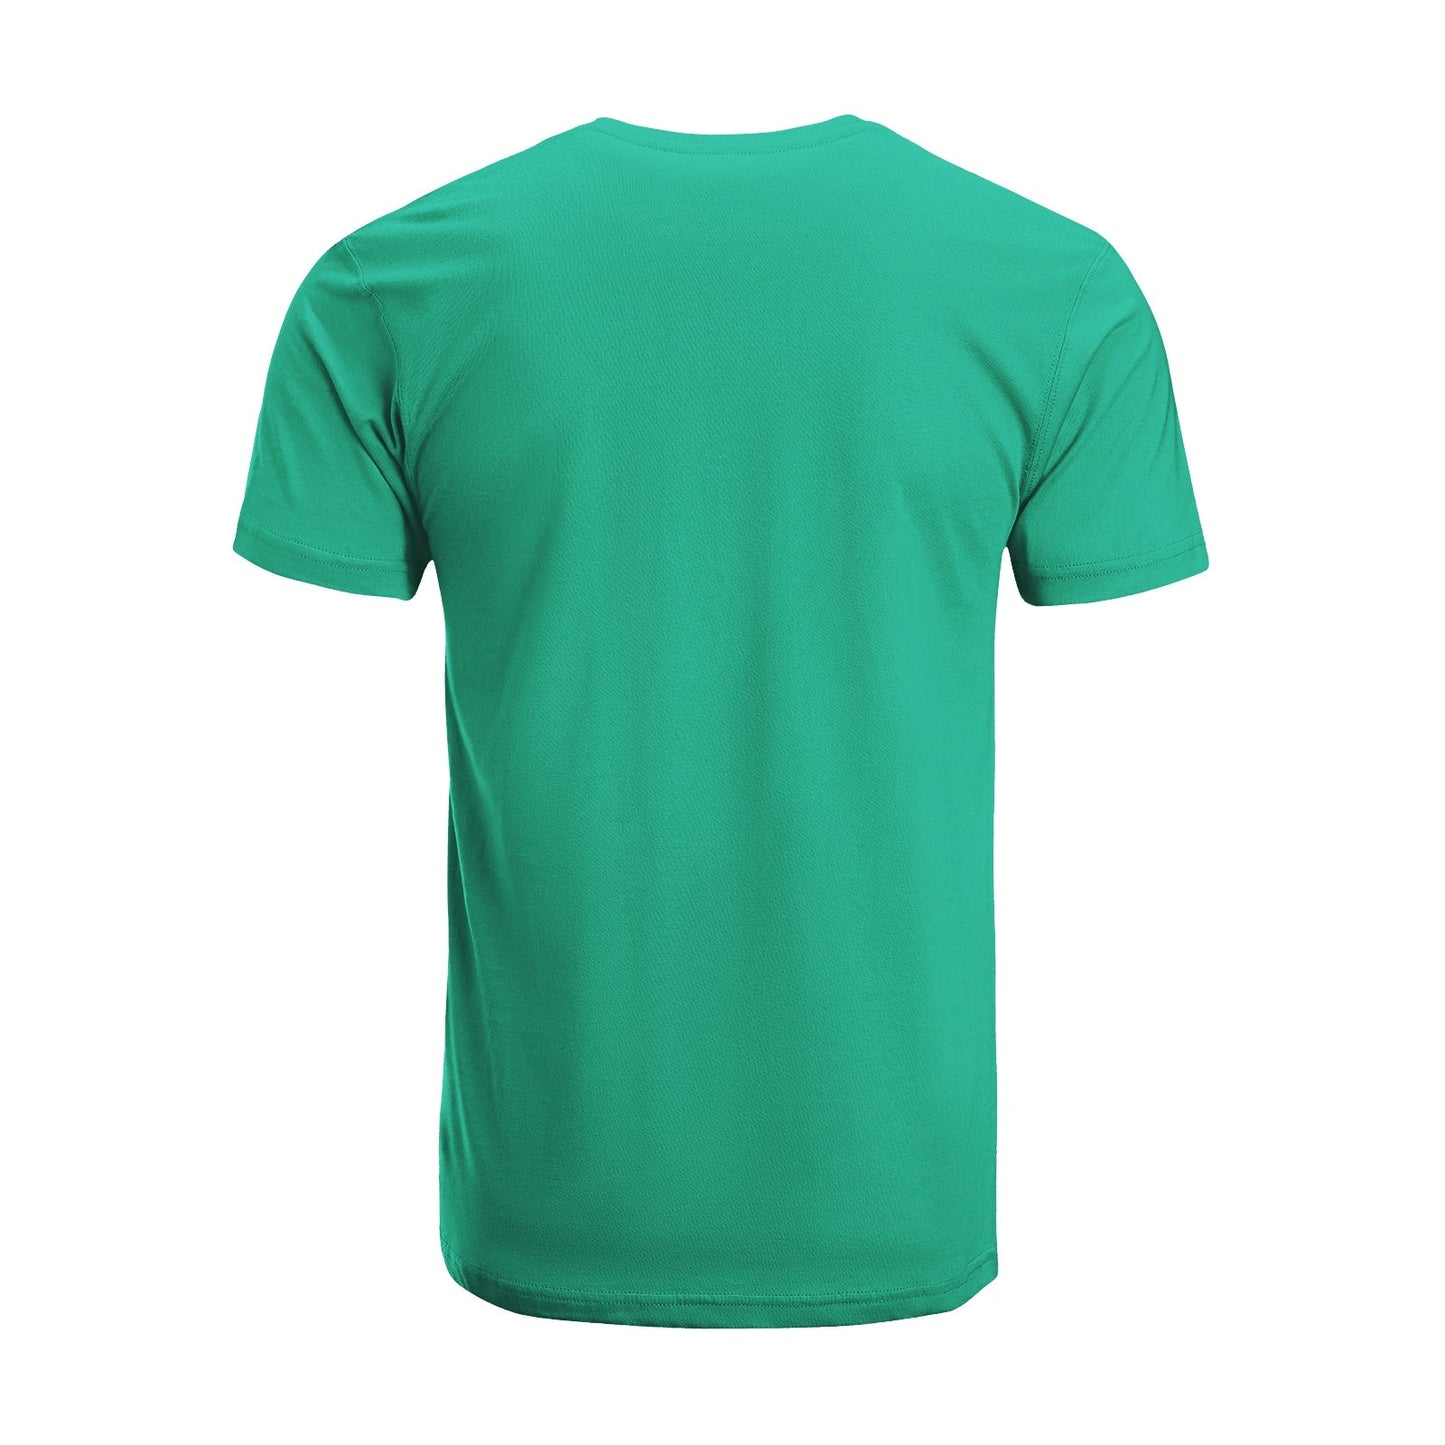 Unisex Short Sleeve Crew Neck Cotton Jersey T-Shirt VEGAN 26